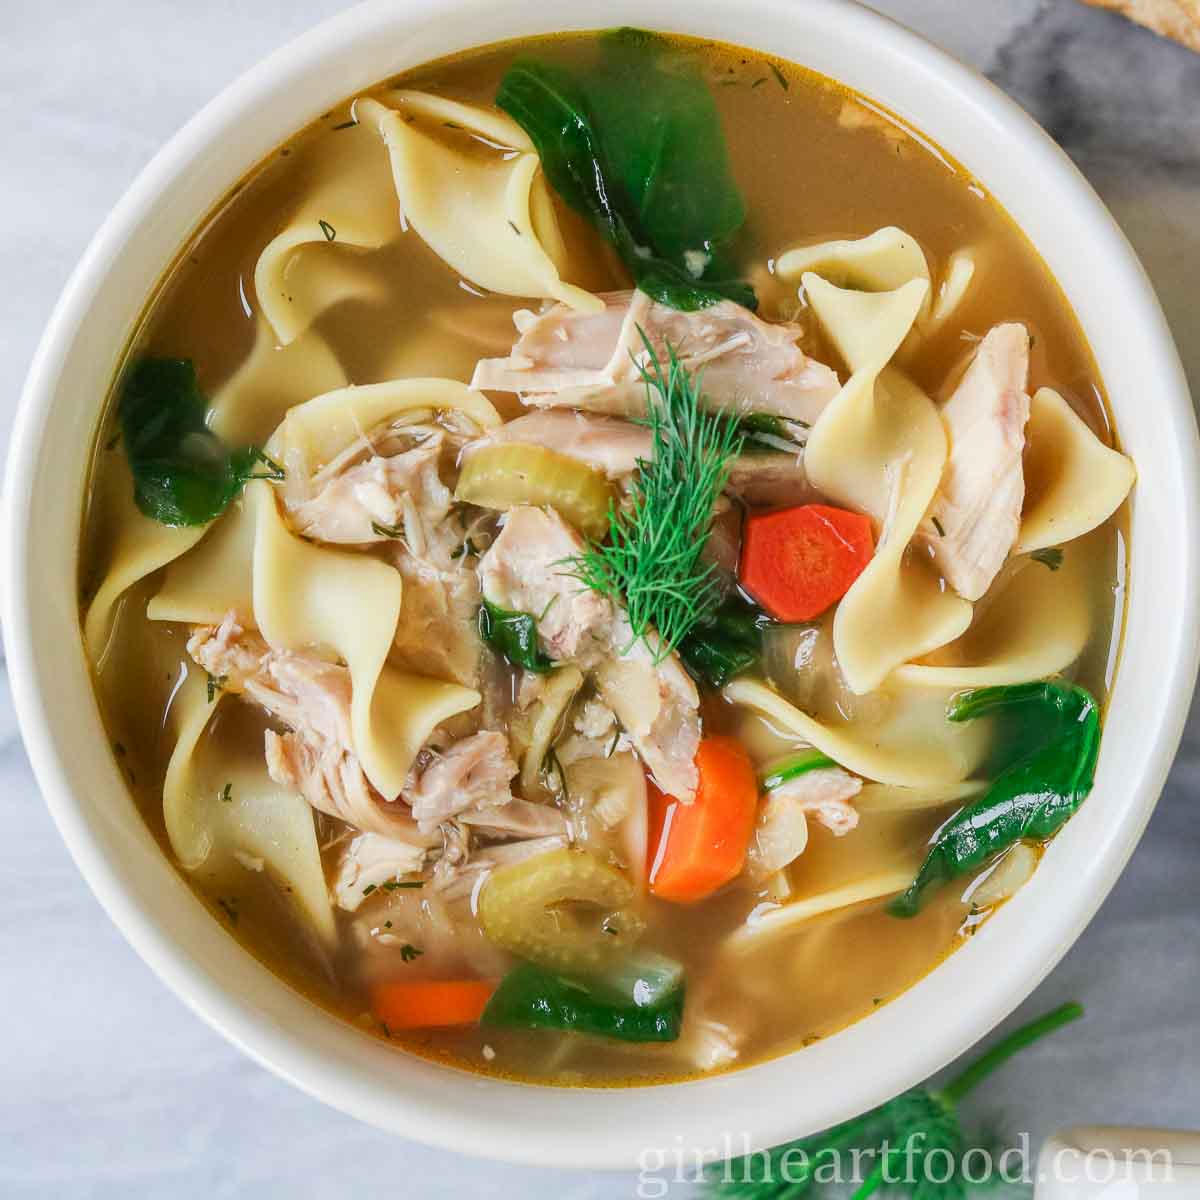 https://girlheartfood.com/wp-content/uploads/2020/06/Best-Homemade-Chicken-Noodle-Soup-Recipe-2.jpg